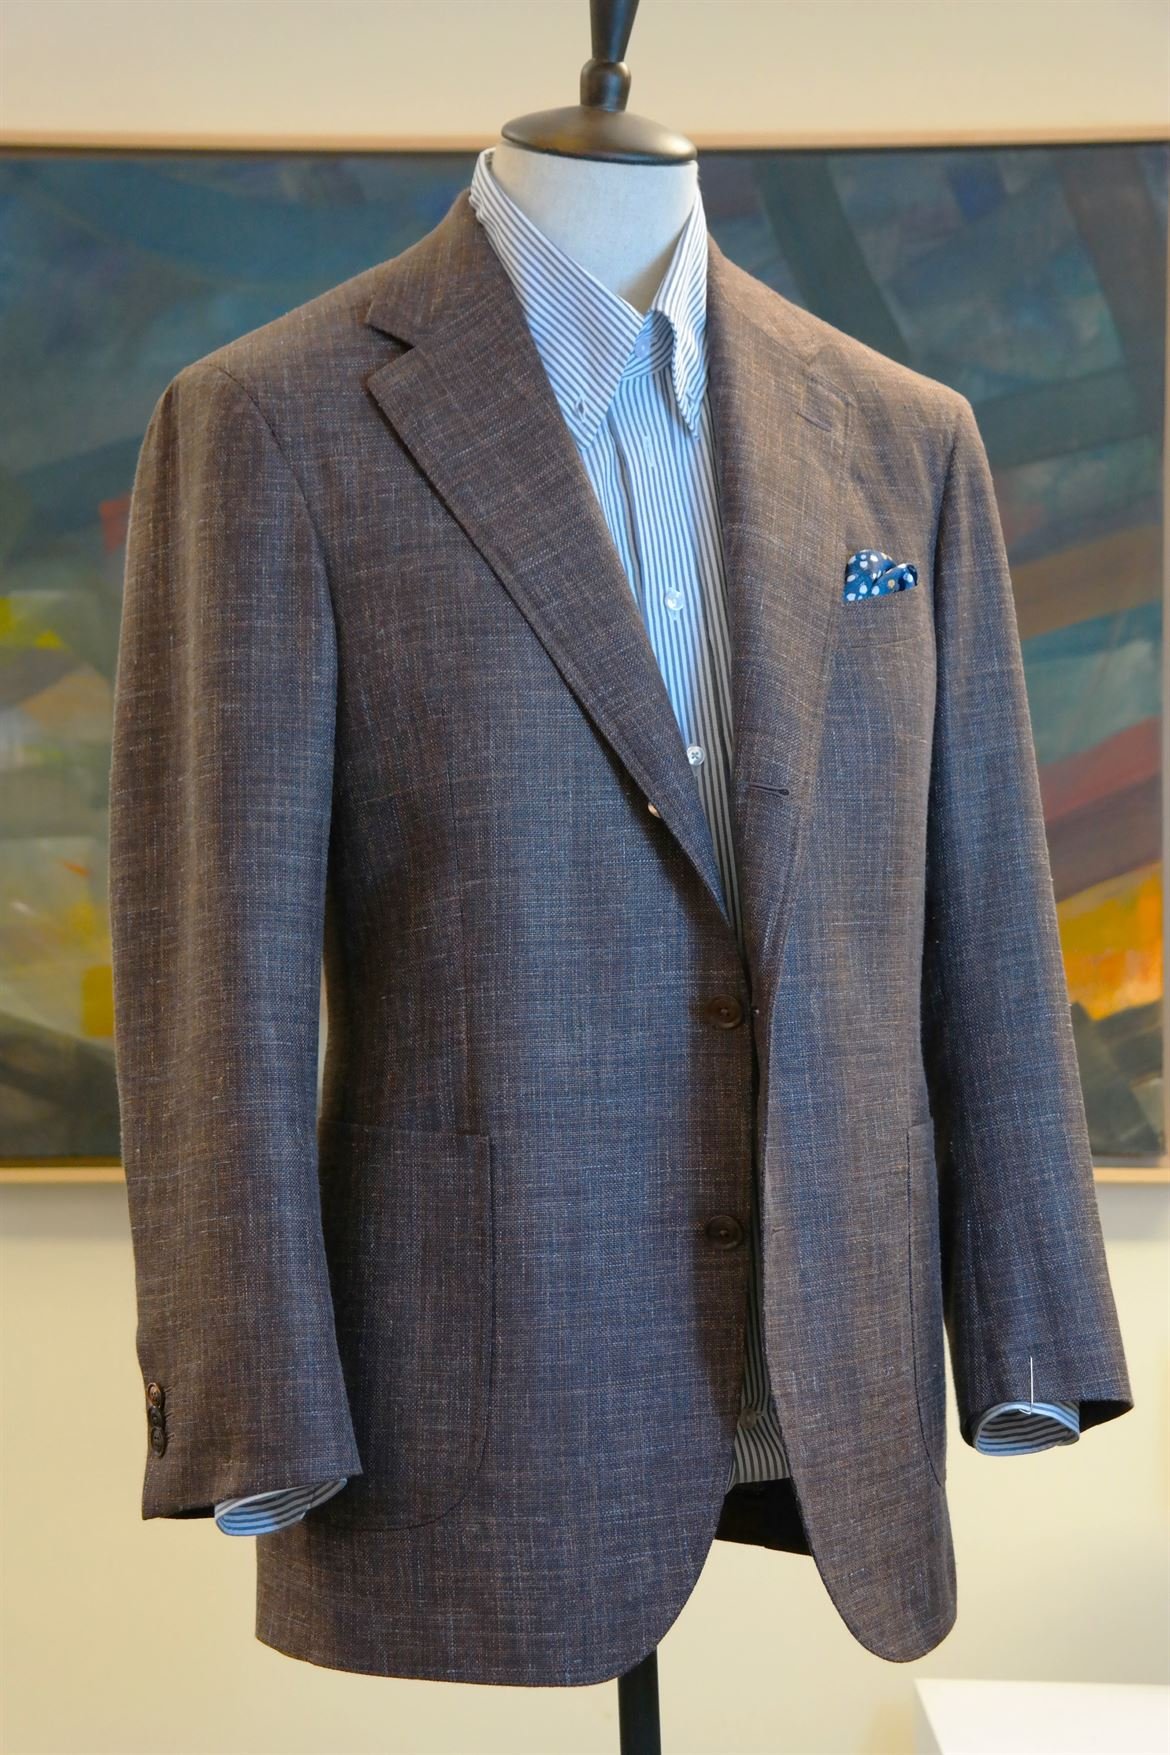 Men's Bespoke & Tailored Suits in Lichfield